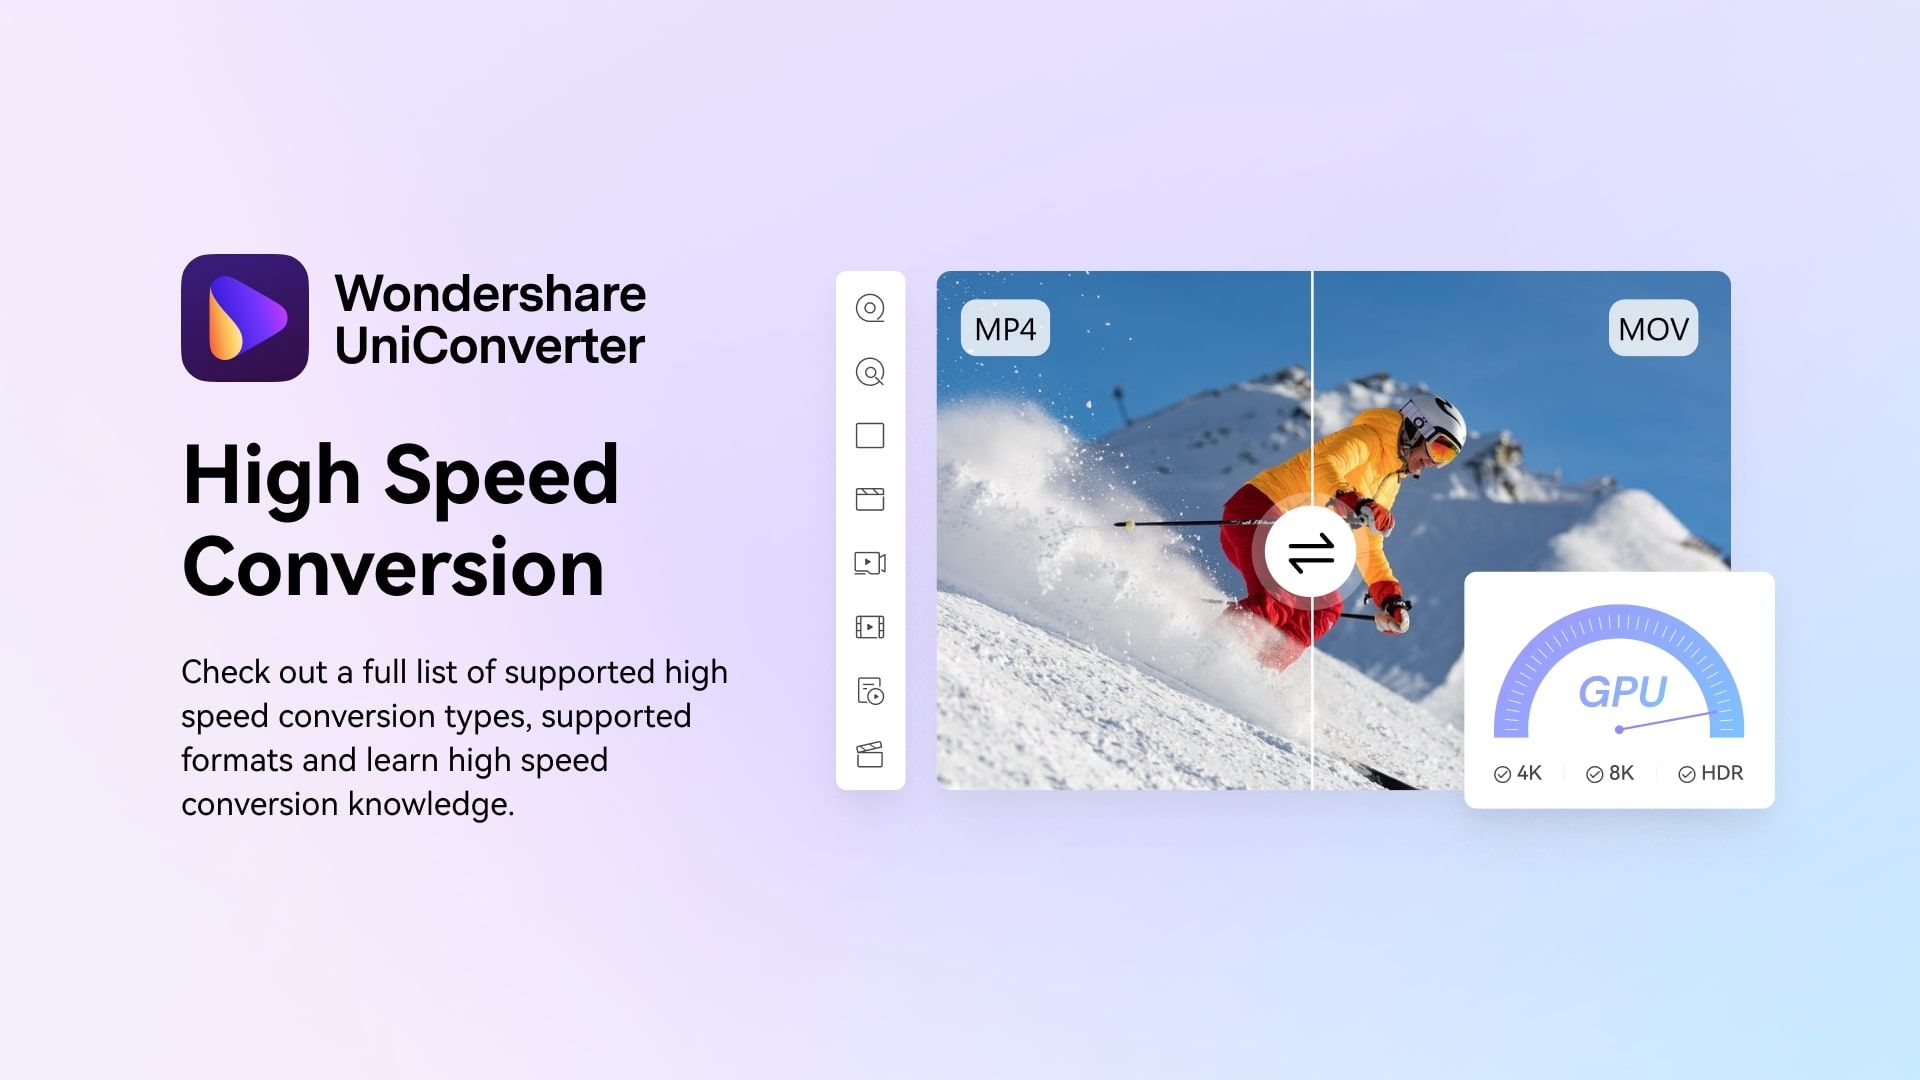 Wondershare UniConverter 14.1.21.213 download the new version for apple